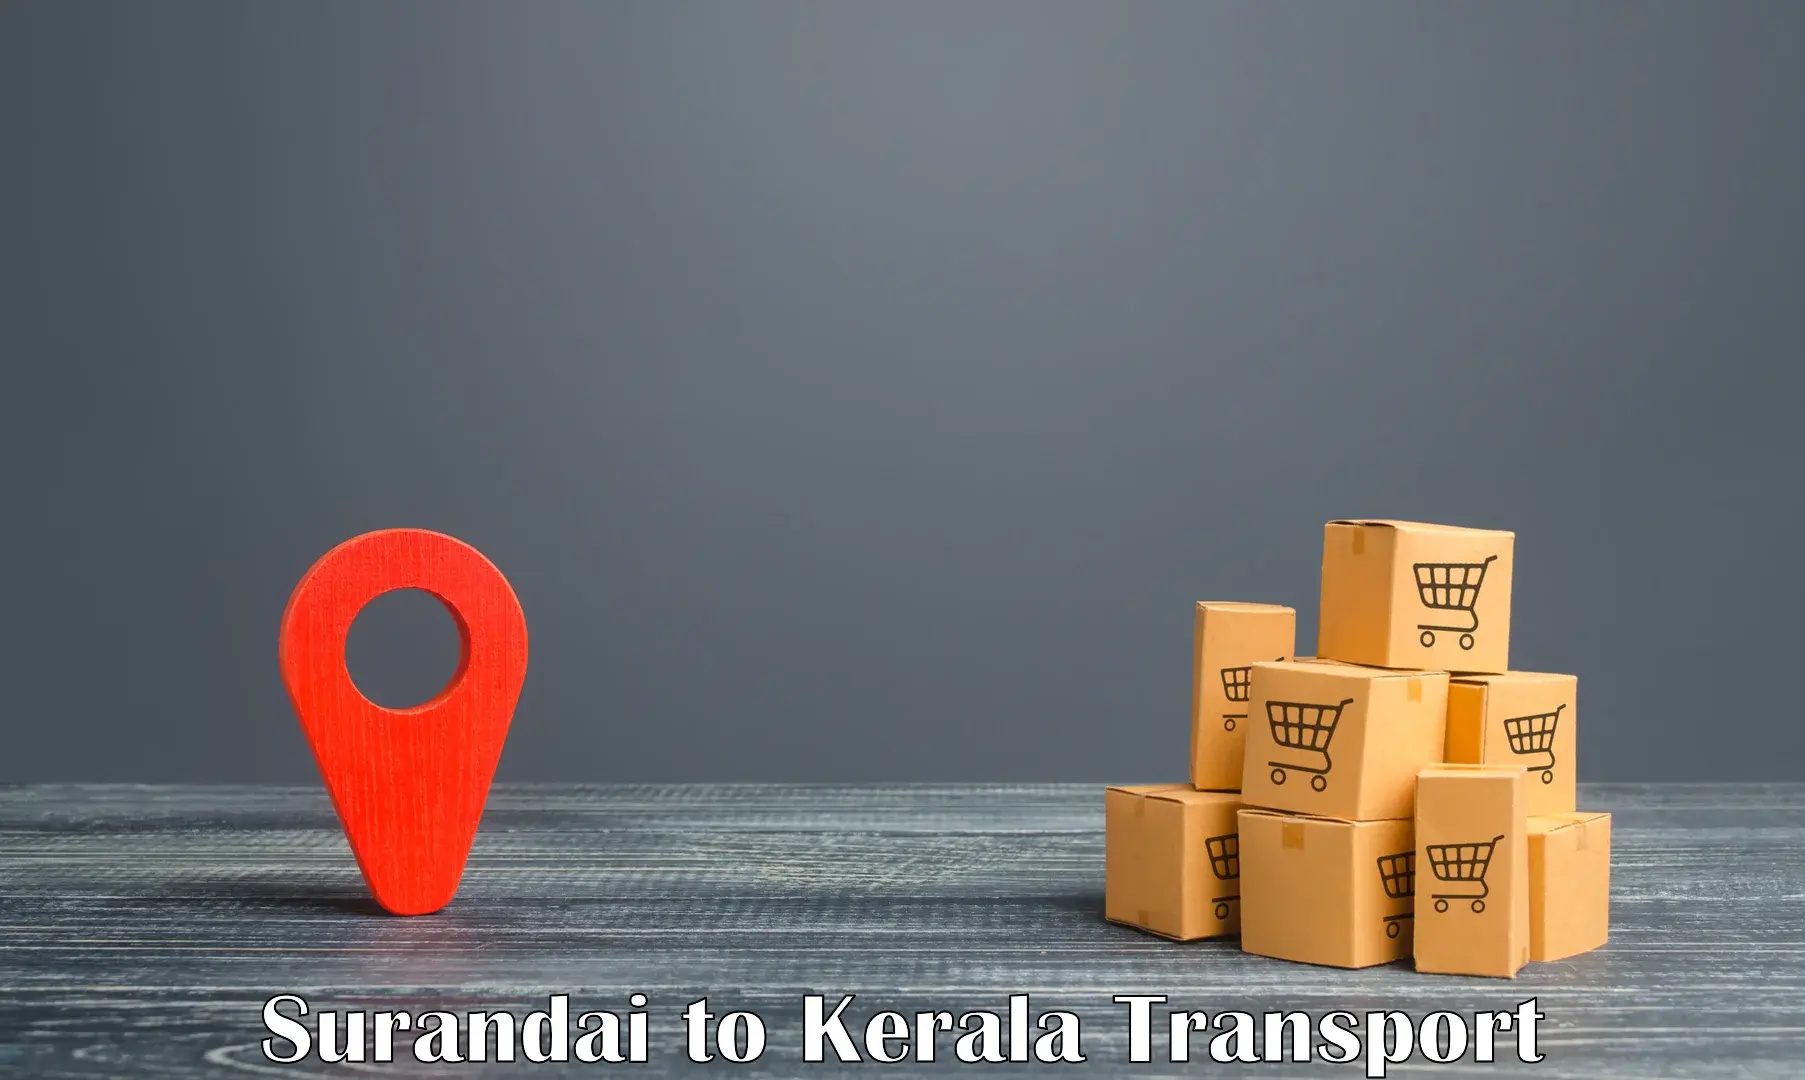 Shipping partner Surandai to Kattappana